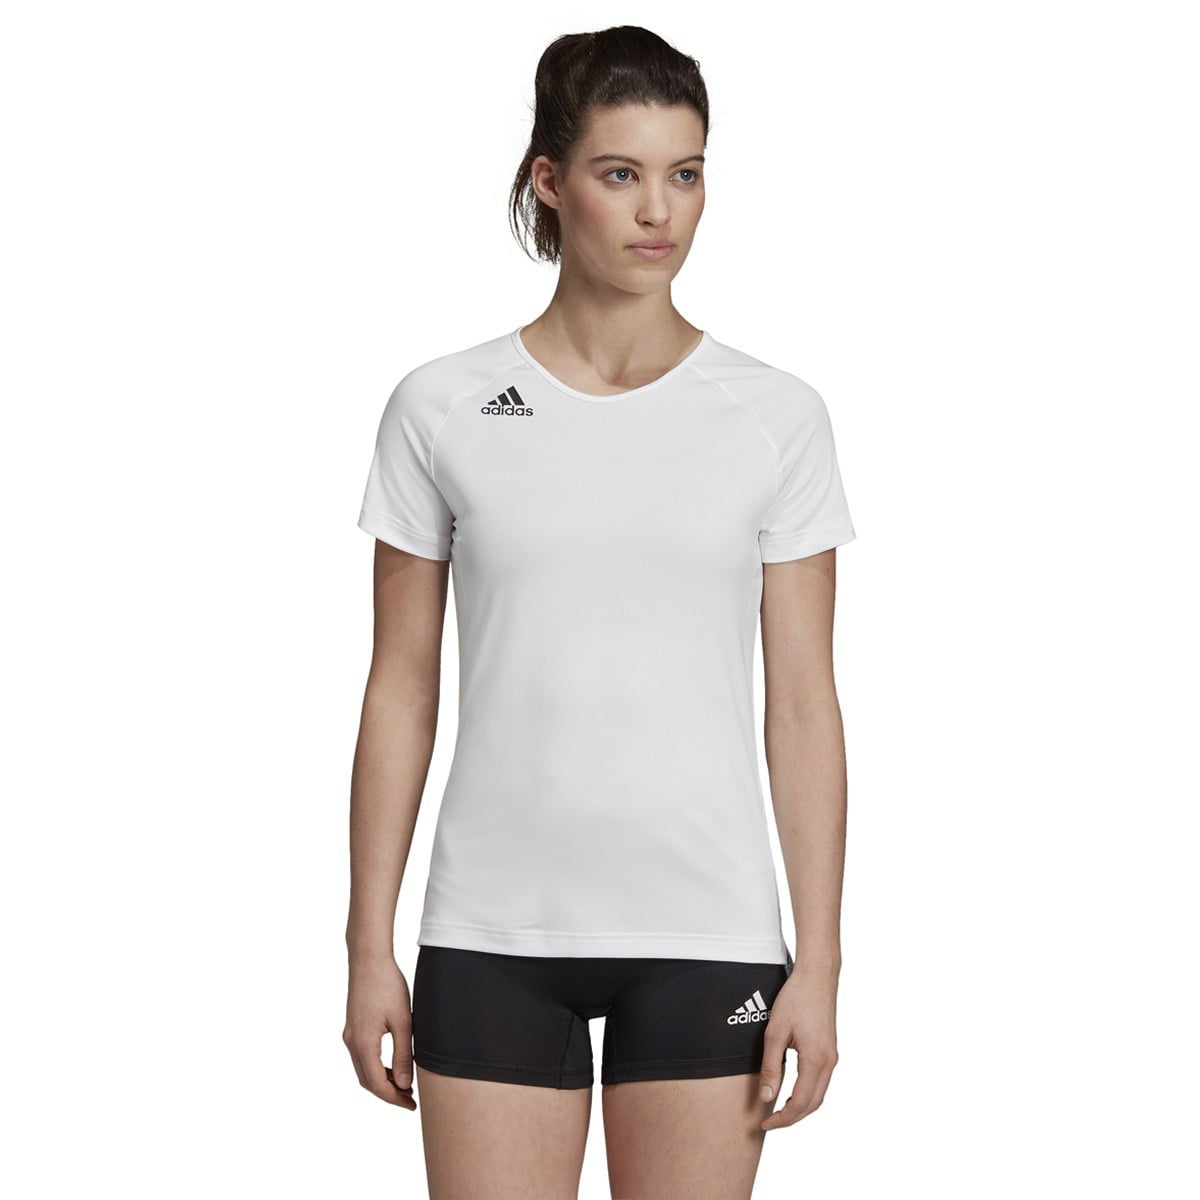 Adidas HILO Women's Short Sleeve Volleyball Jersey DP4343 - White, Black